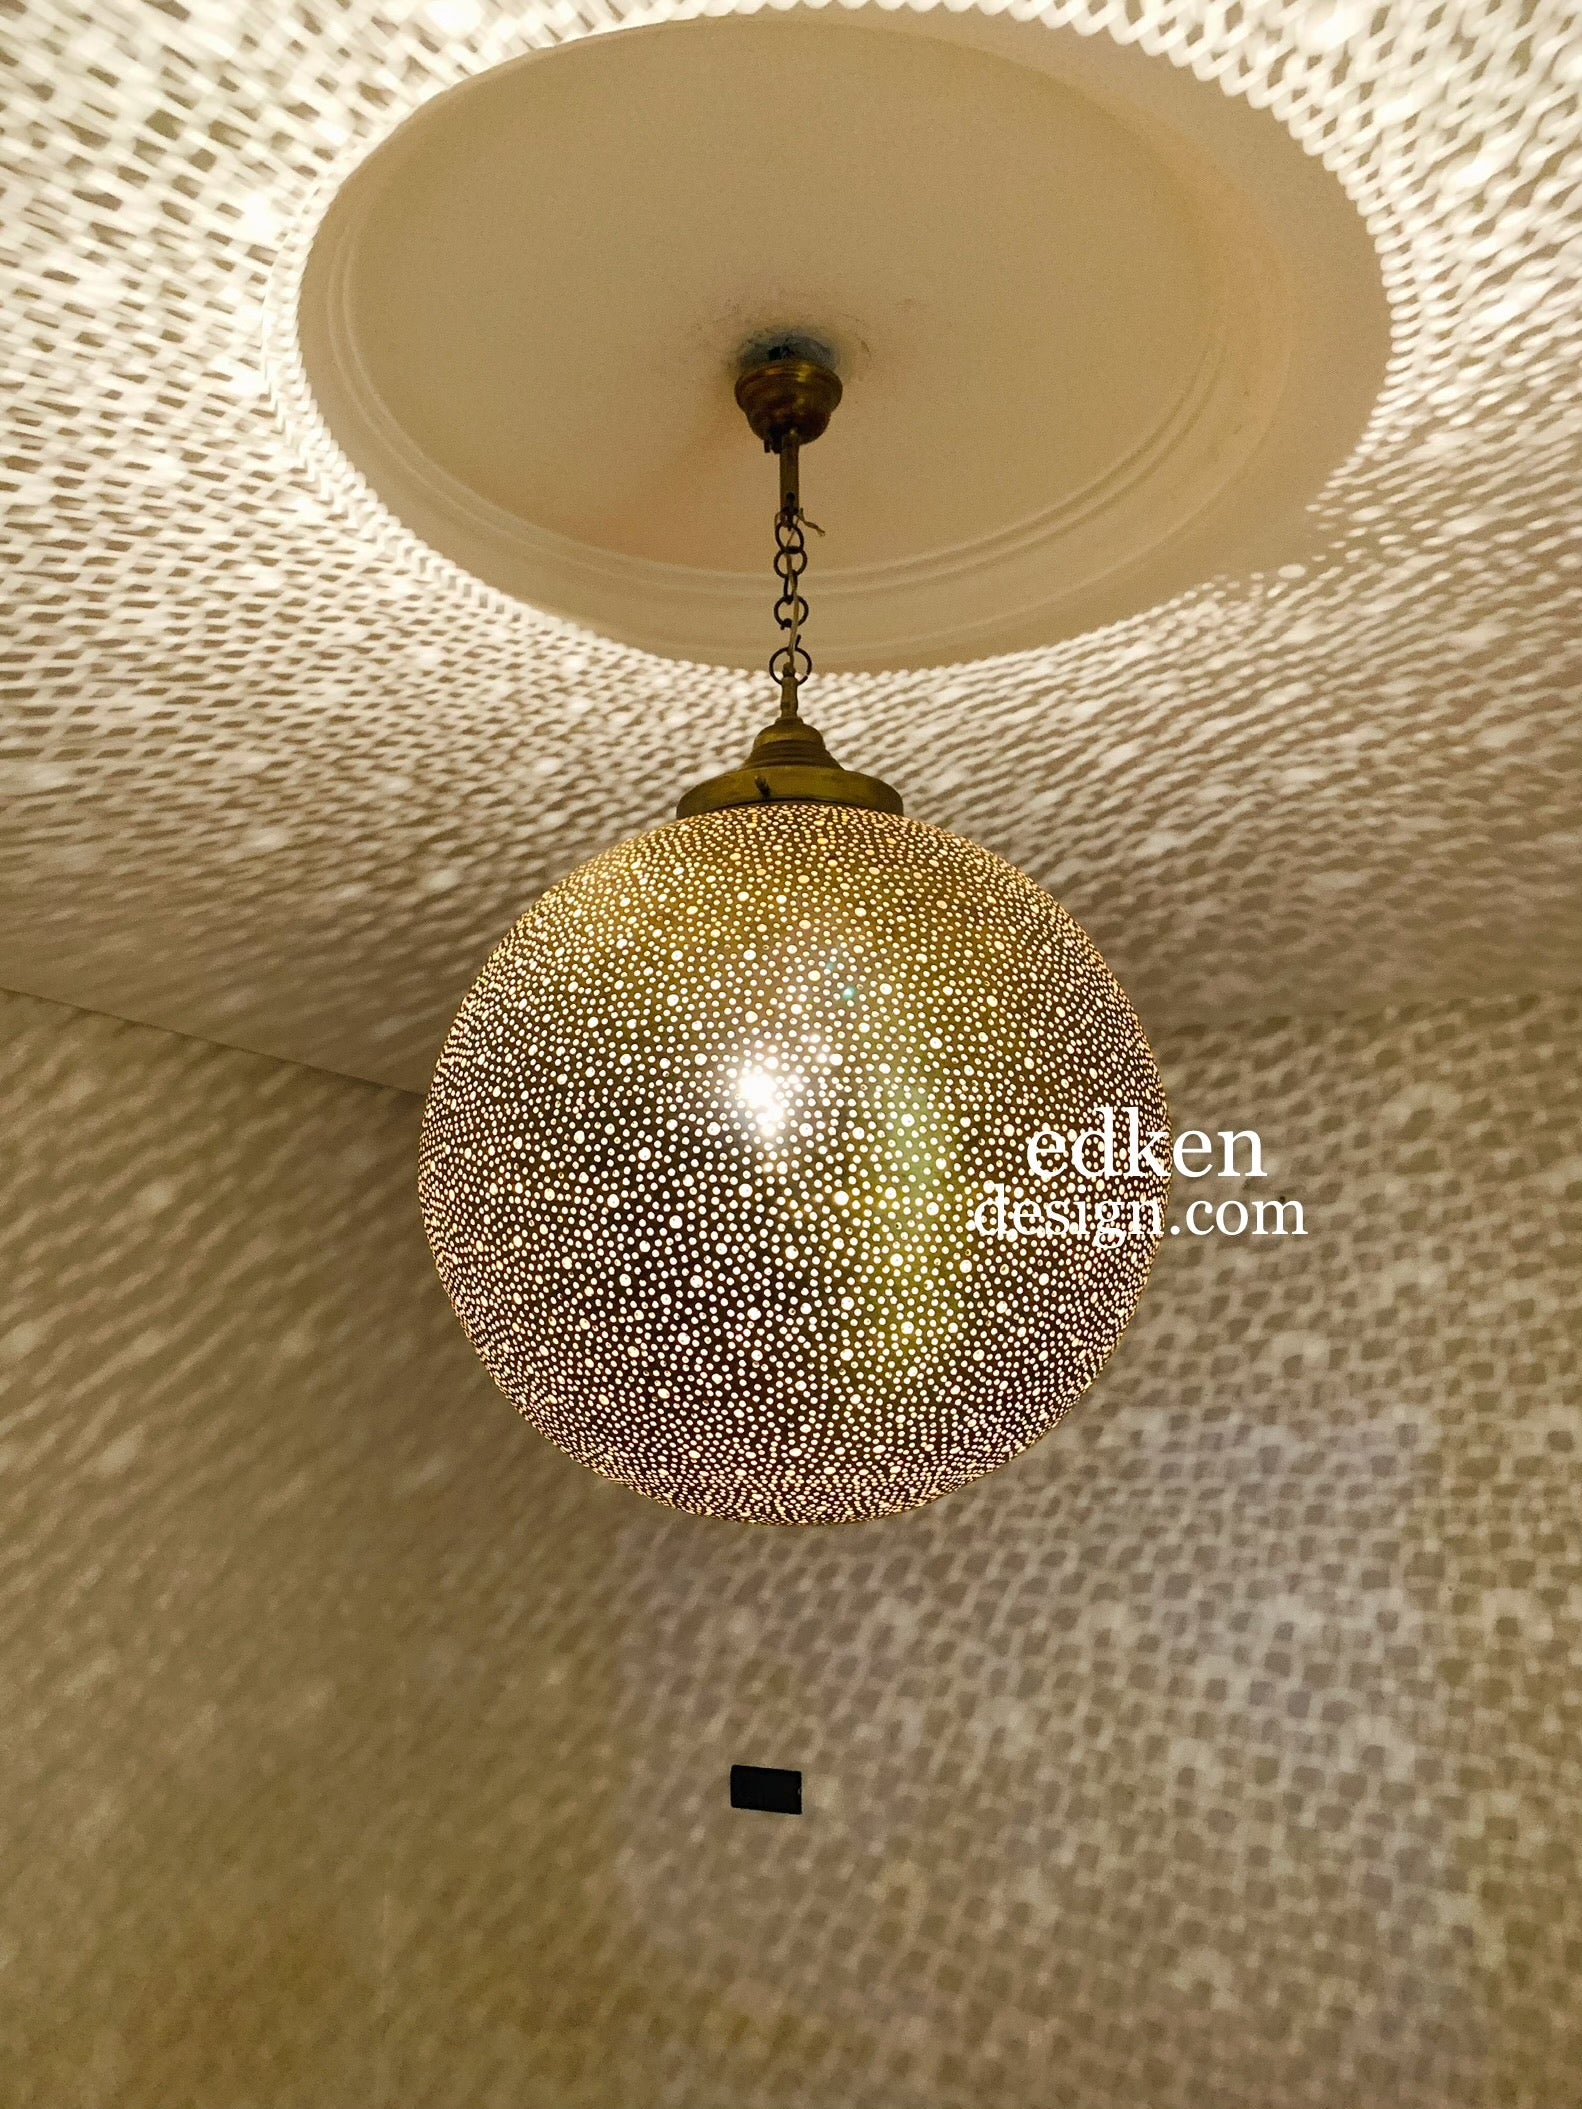 EDKEN LIGHTS - Morocco Ceiling Lamp Shades Globe Shape Fixture Ball pierced Hanging Lights Handmade Brass Morocco Lamp